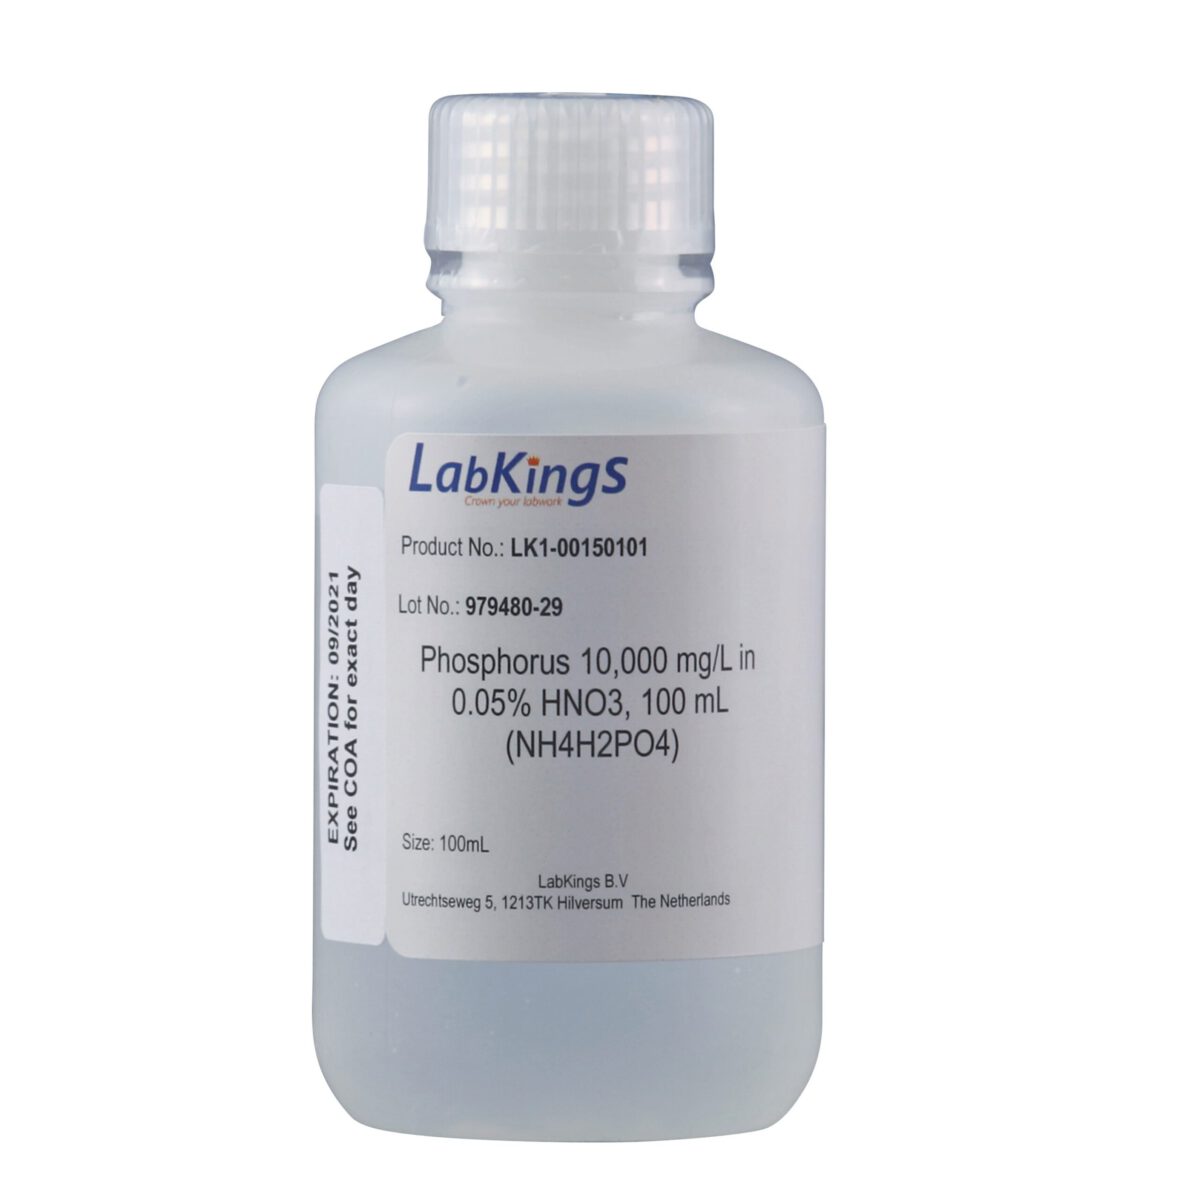 Phosphorus 10,000 mg/L (NH4H2PO4),0.05% HNO3, 250ml